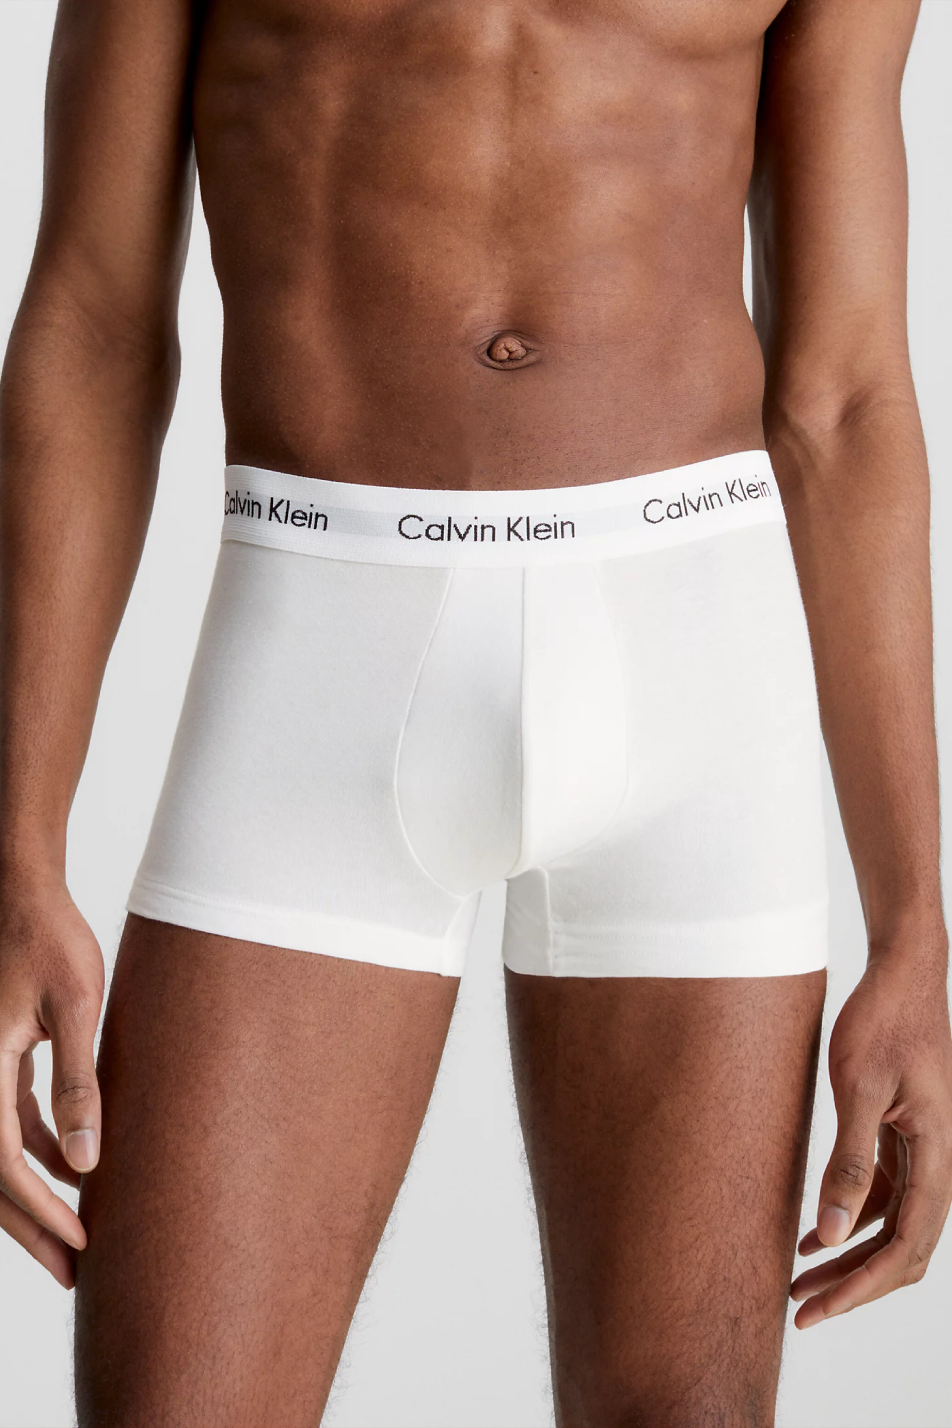 Calvin Klein 3 Pack Men's Cotton Stretch Low Rise Trunks